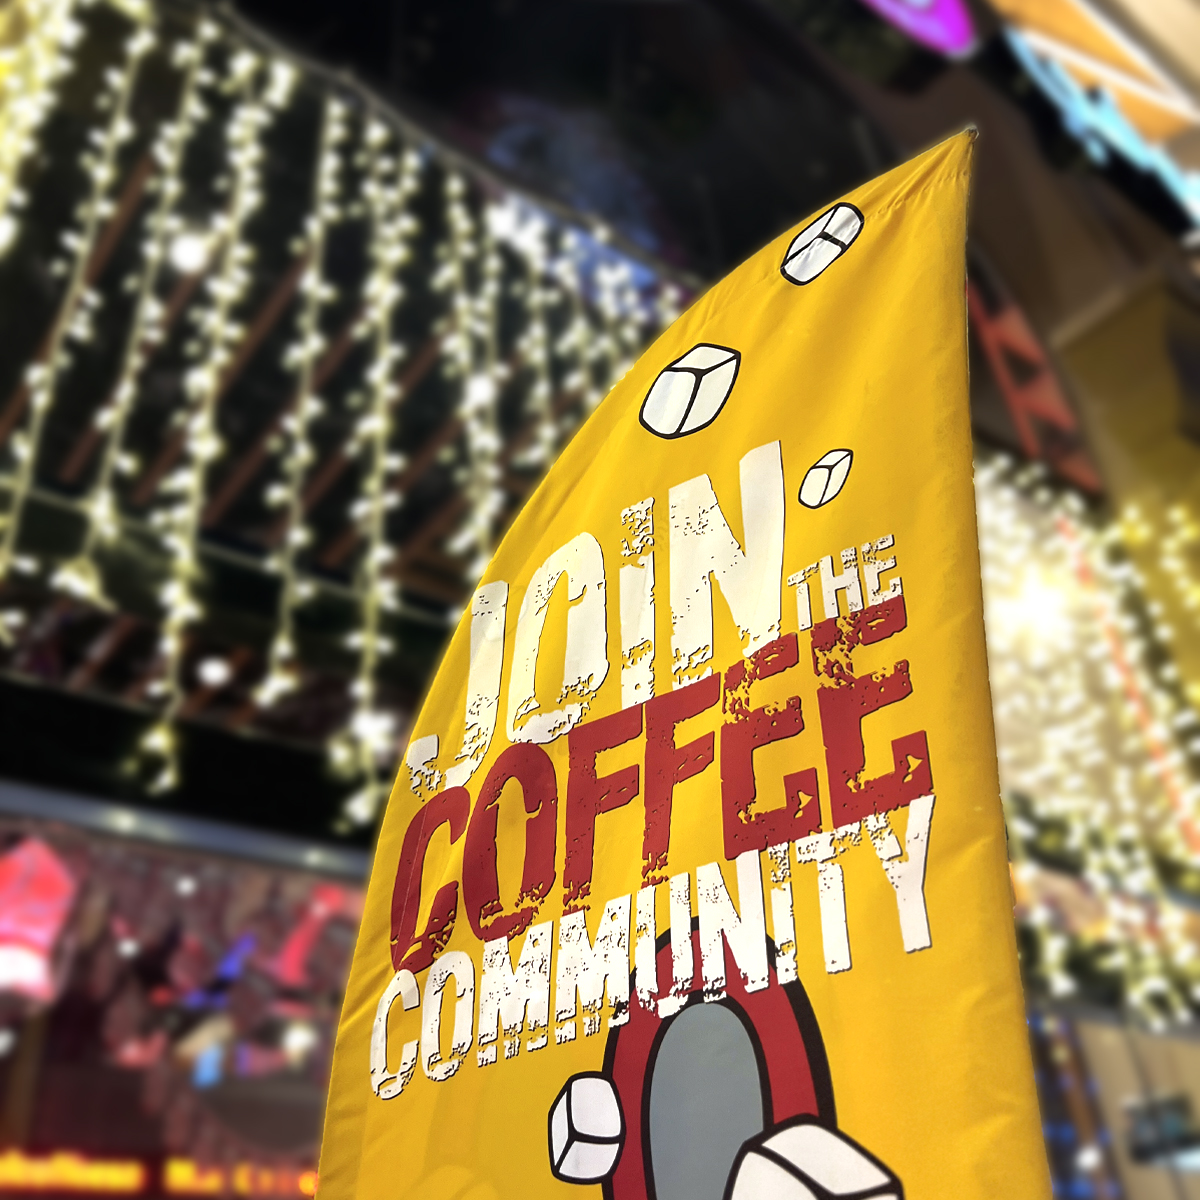 Join The Coffee Community - Mikel ☕🌙
#ميكيل
#mikel
.
#جدة #جدة_الان #السعوديه #ميكيل #jeddah_food #قهوة
#mikel
#coffeelovers #coffeetime #mikelcoffee #coffeeshop
#بوليفارد #الرياض #اليونان #Ramadan